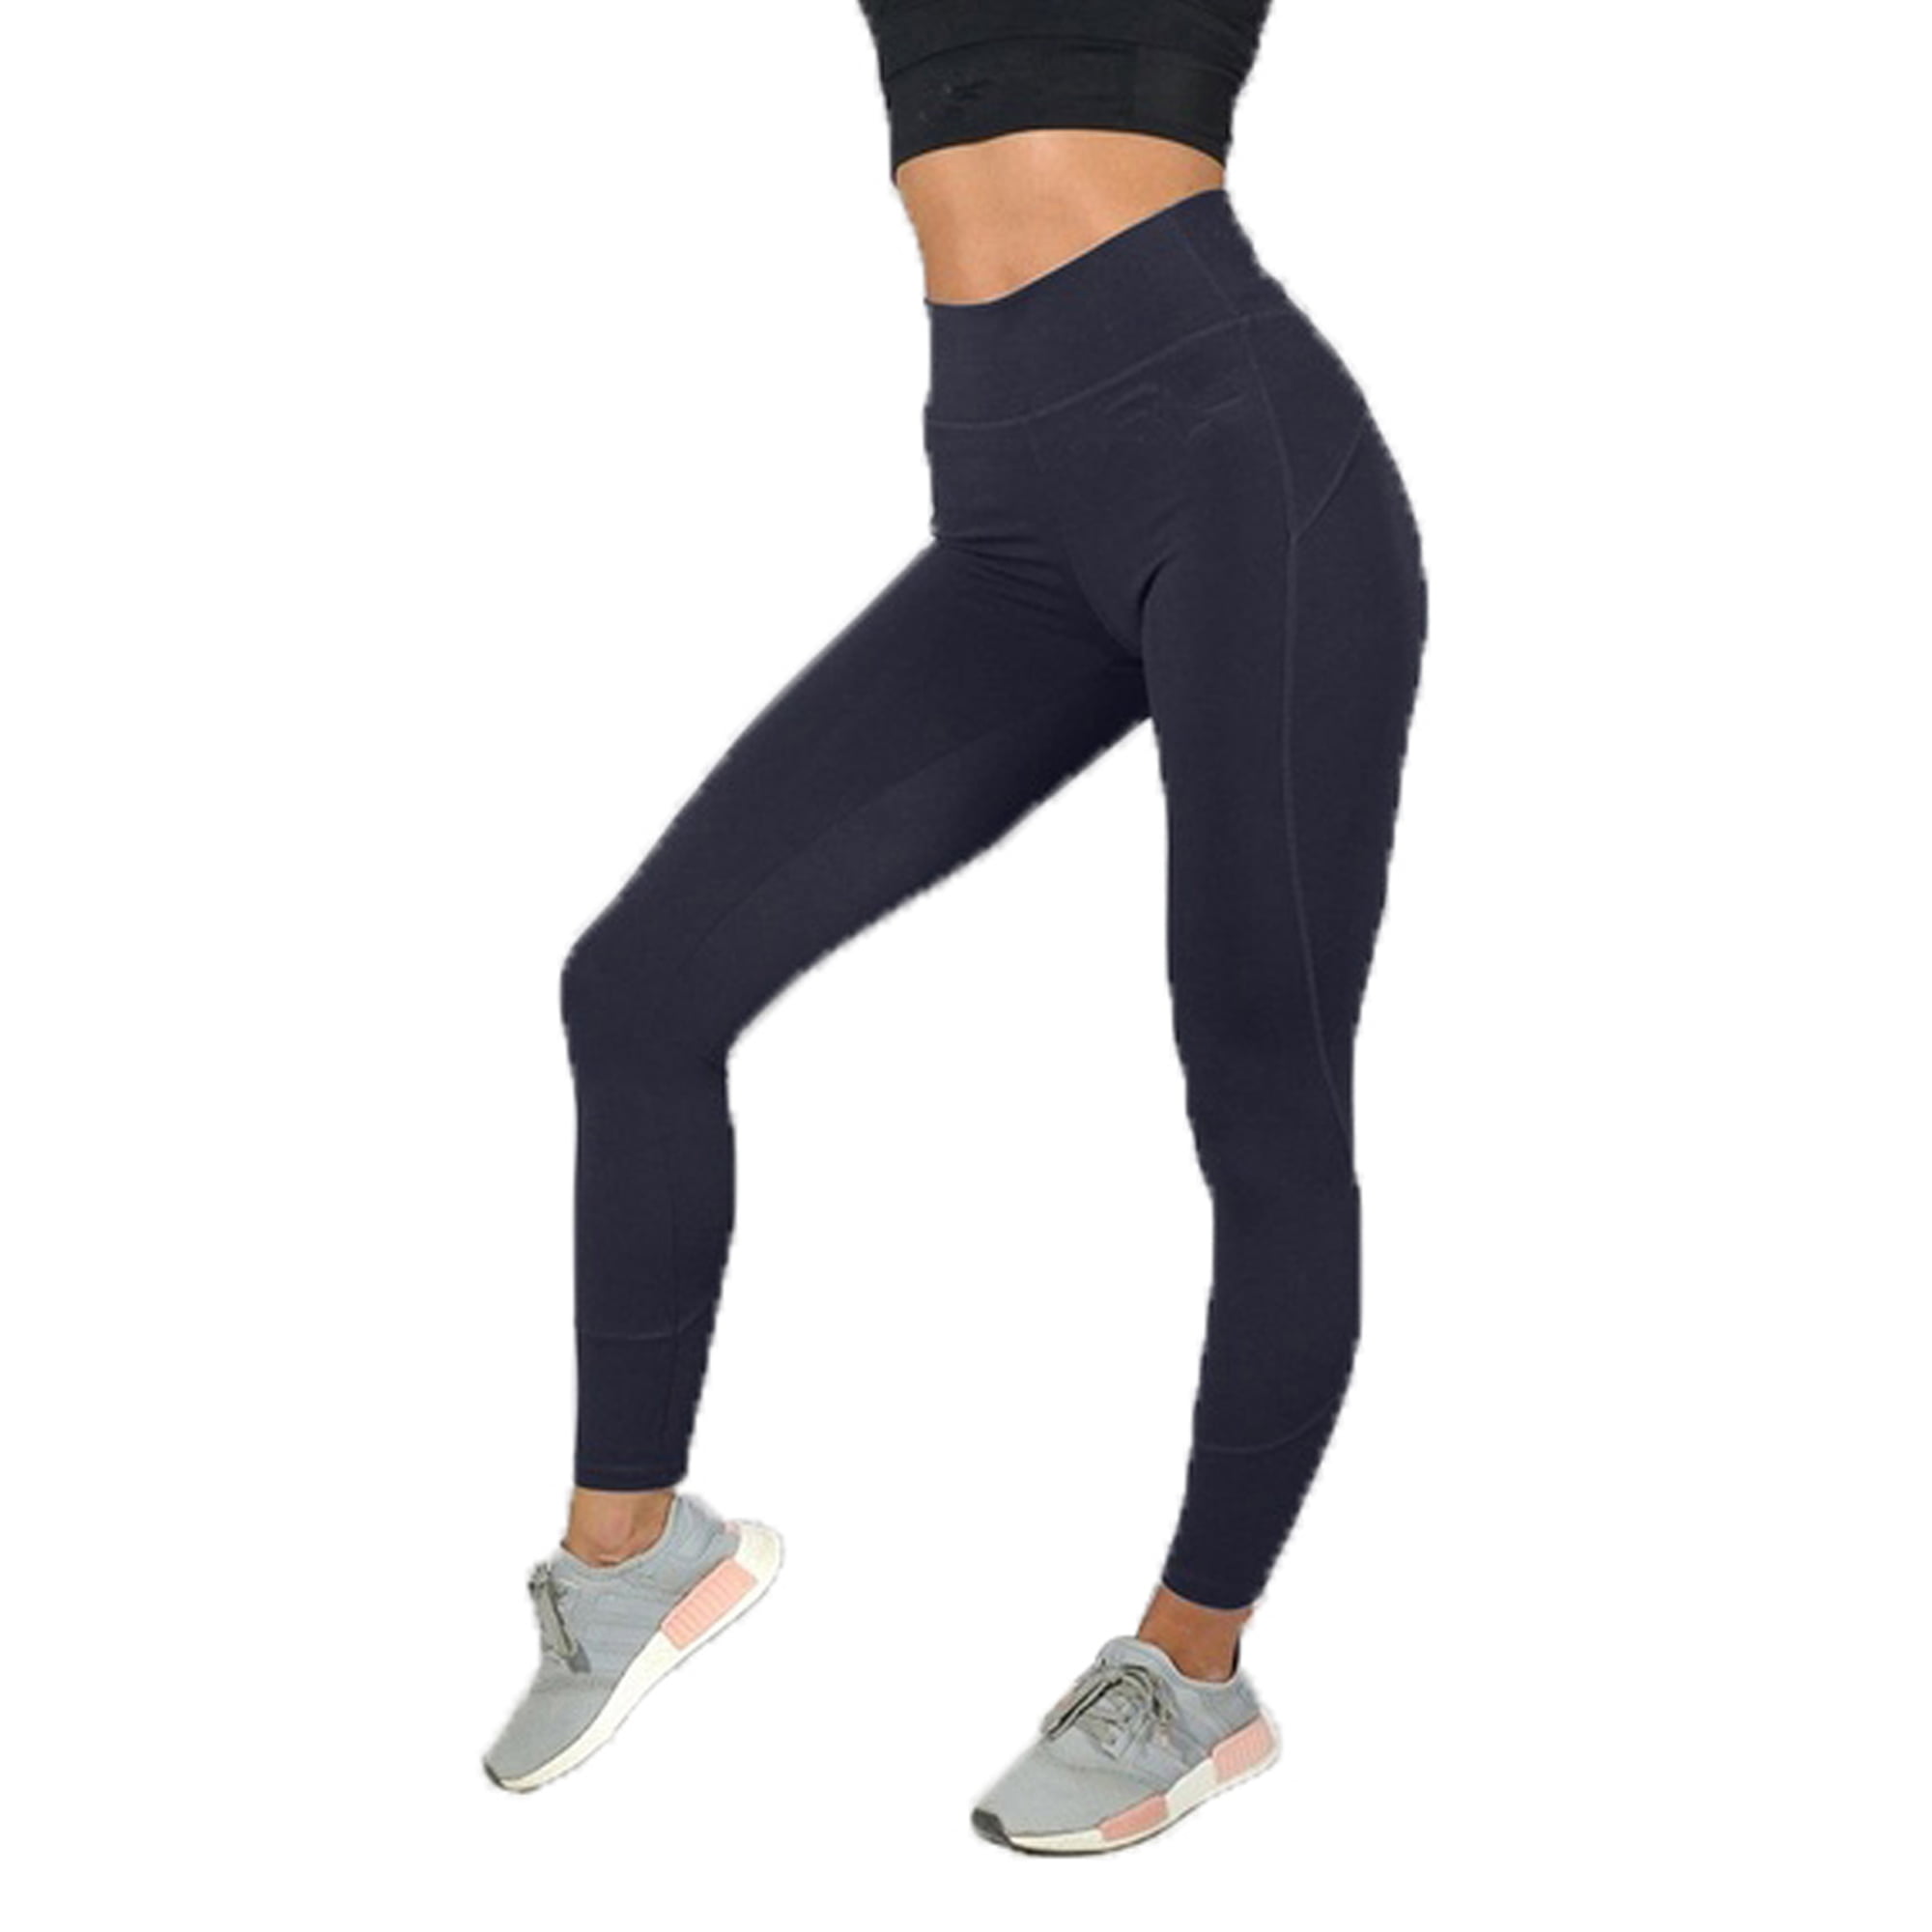 Merqwadd Women Stretch Leggings Pants Running Gym Sport Yoga Trousers ...